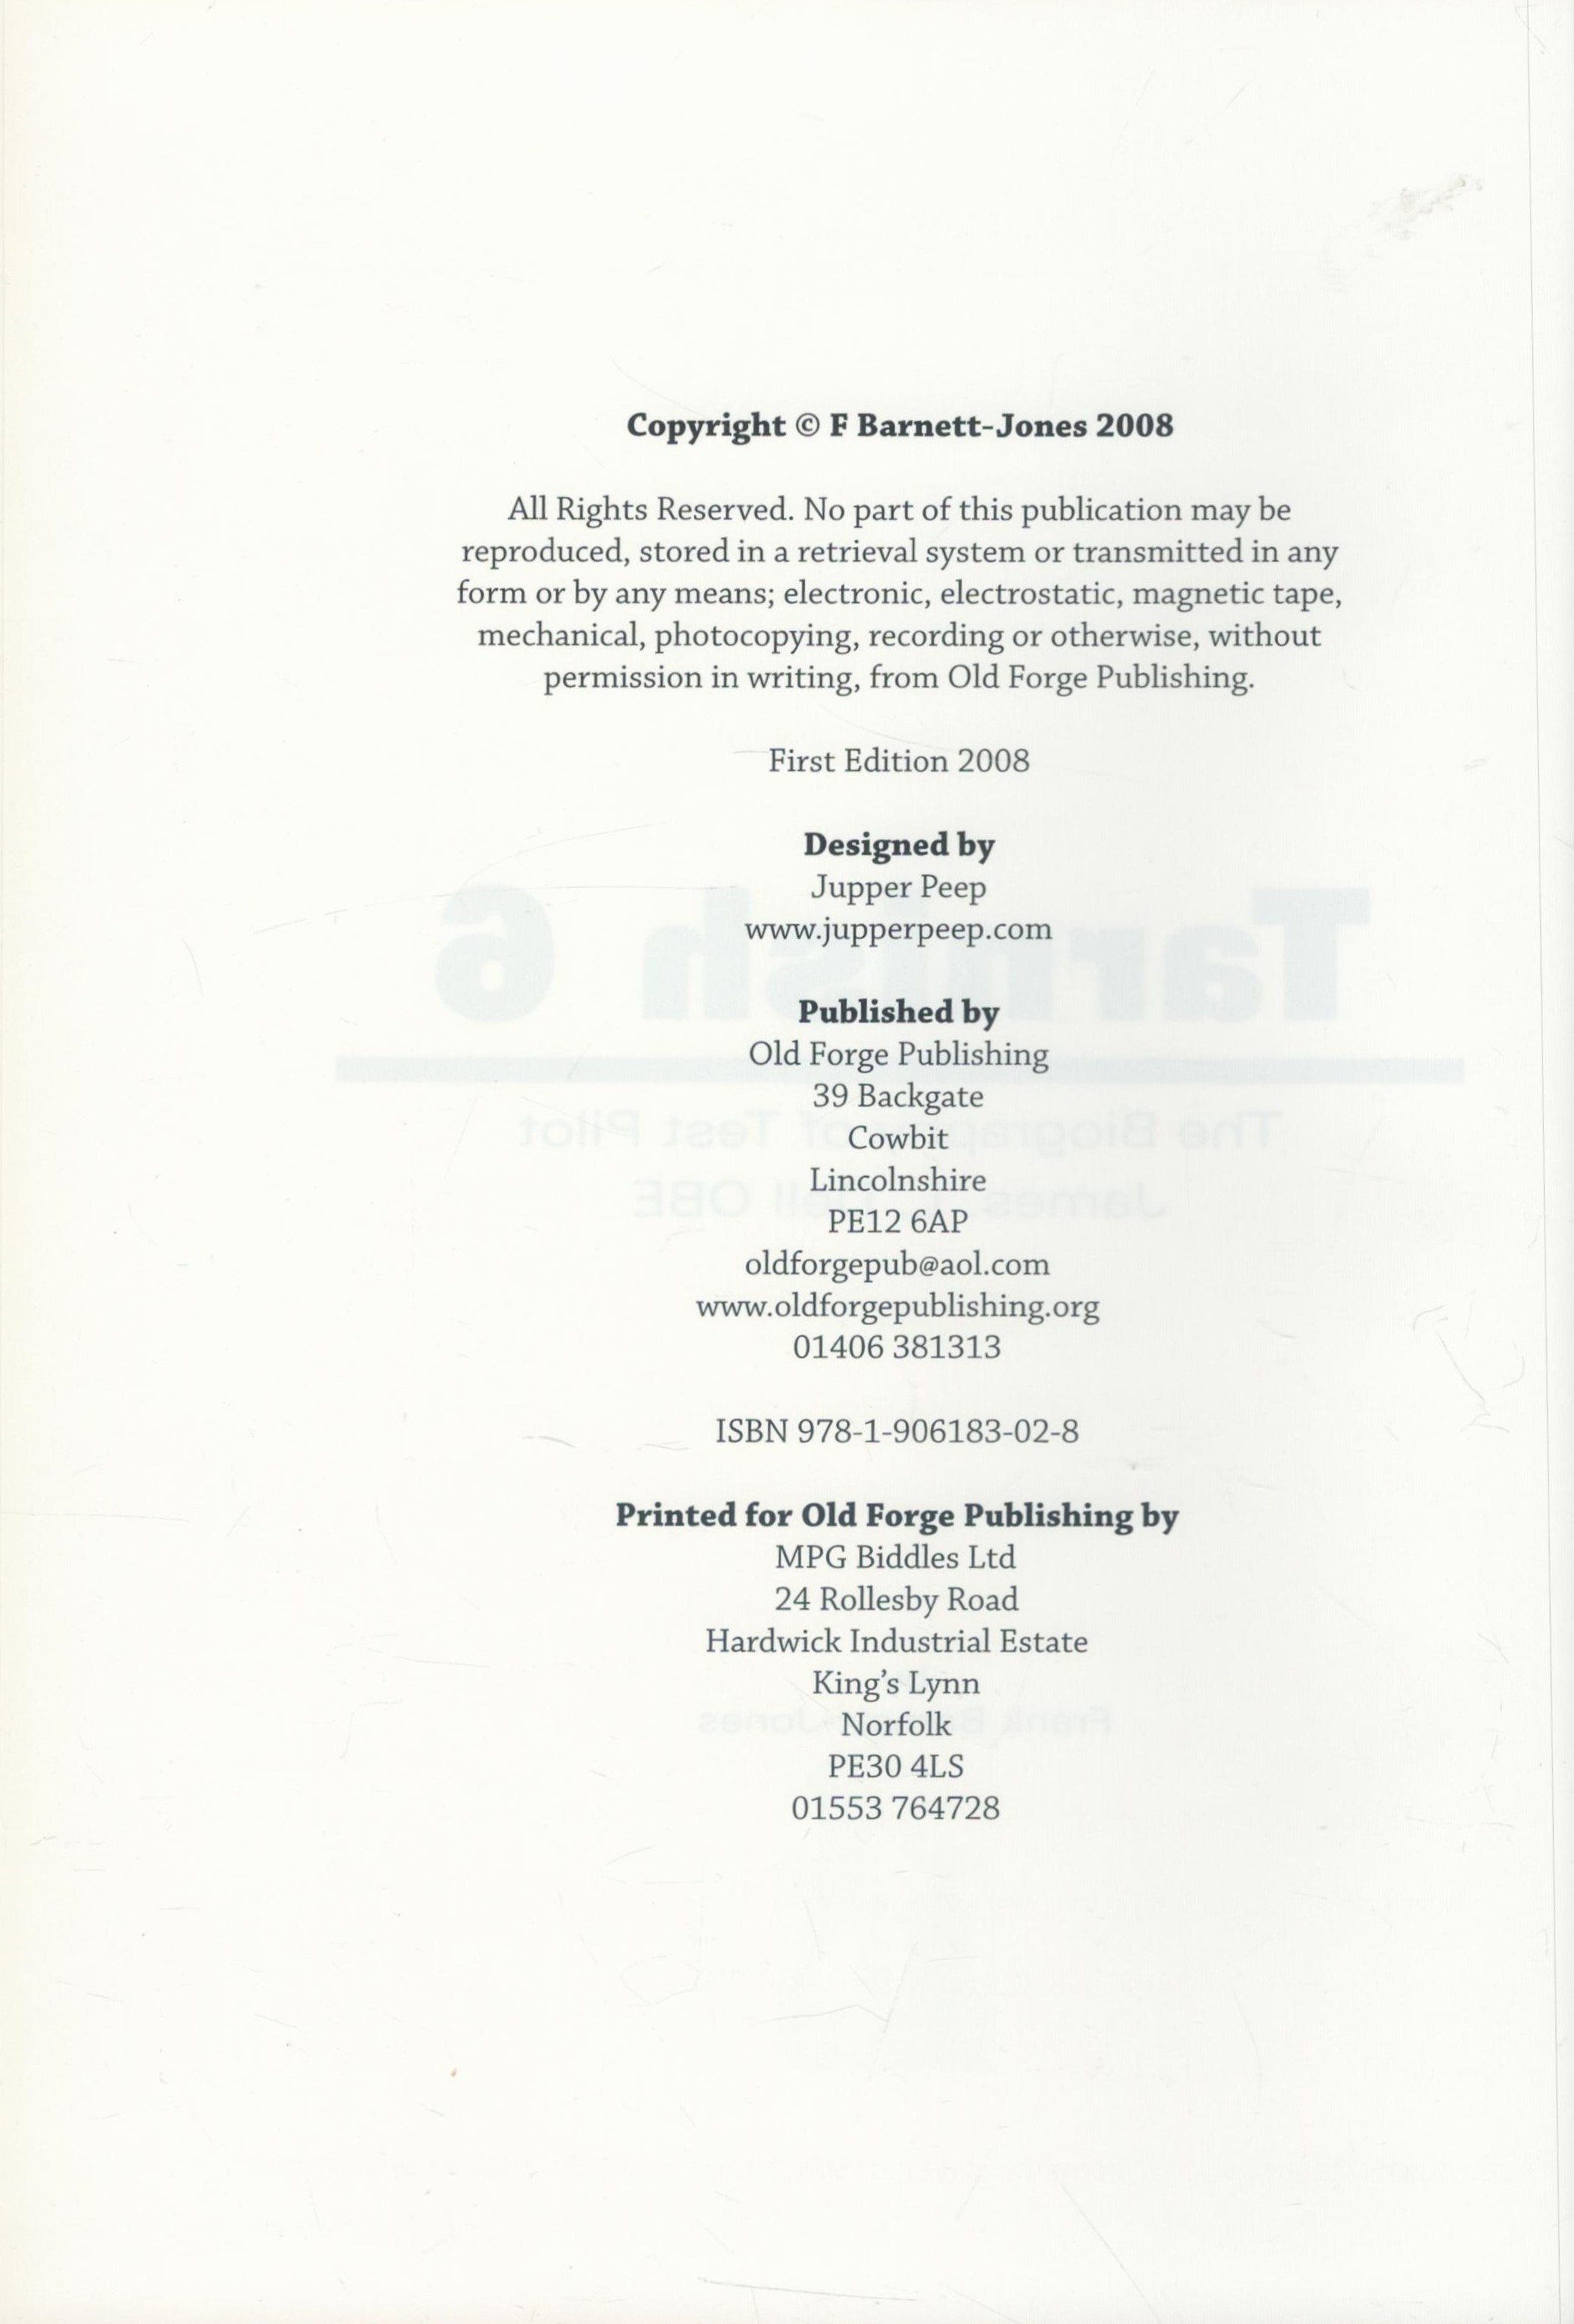 Tarnish 6 - The Biography of Test Pilot Jimmy Dell by Frank Barnett-Jones 2008 Hardback Book First - Image 7 of 9